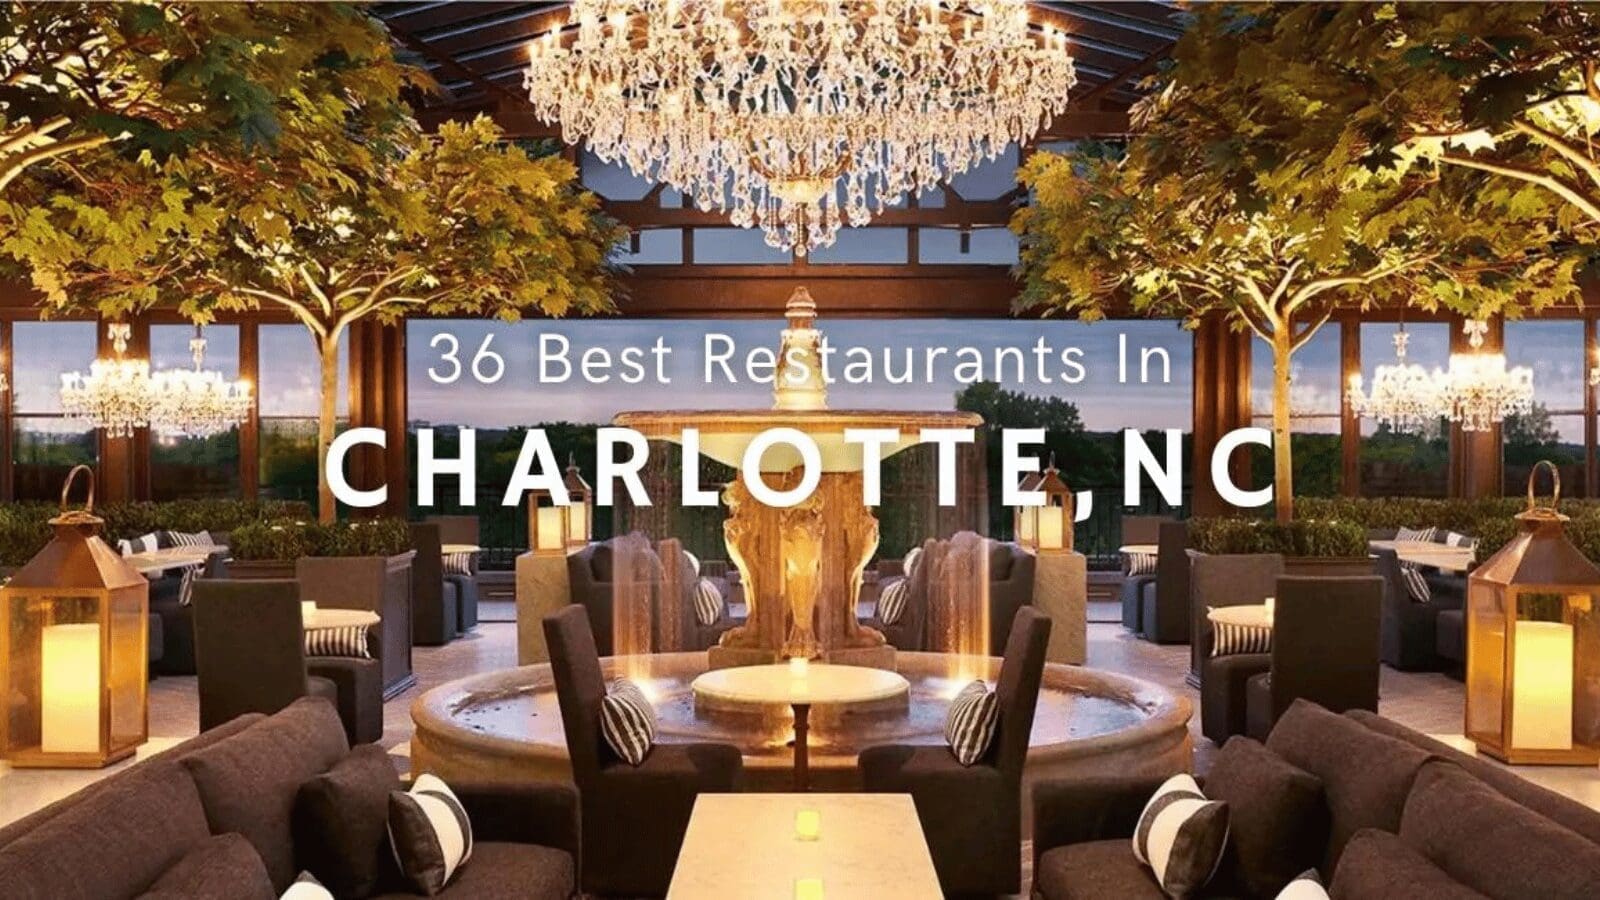 Uptown & beyond: 36 best restaurants in charlotte nc by neighborhood